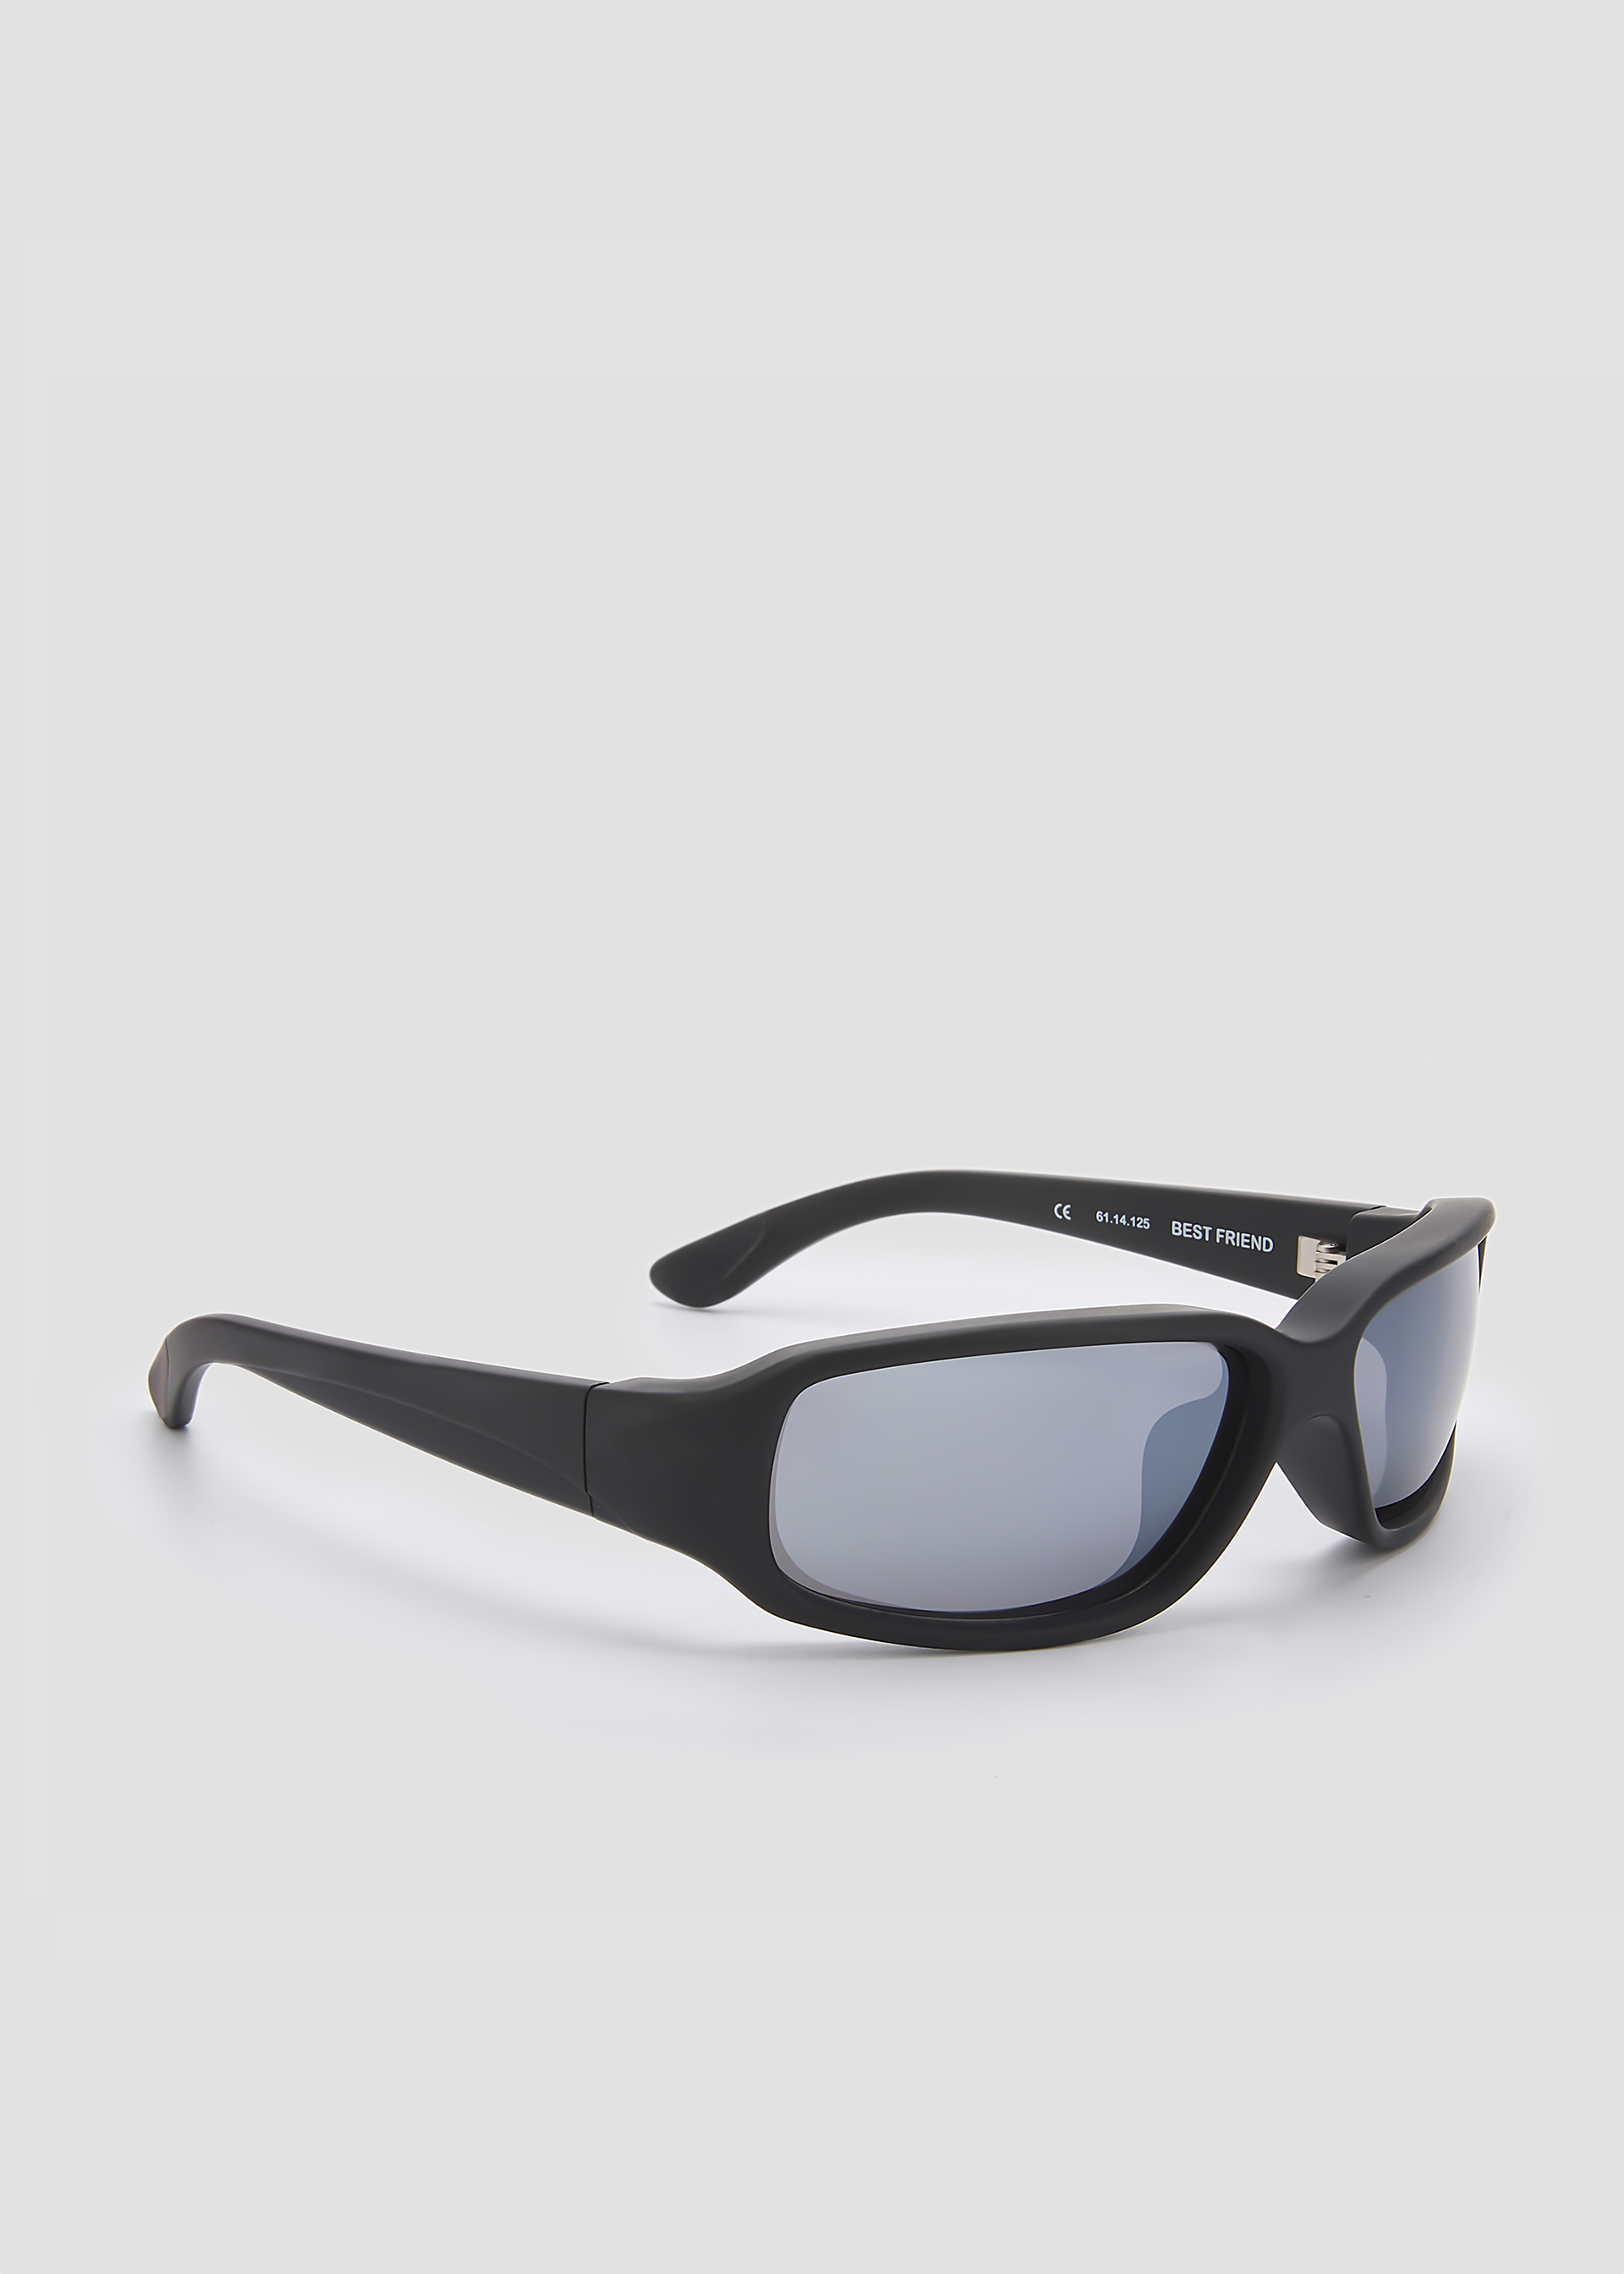 Sunglasses Randolph Concorde Black Matte CR063 57-15 Polarized in stock |  Price 213,25 € | Visiofactory